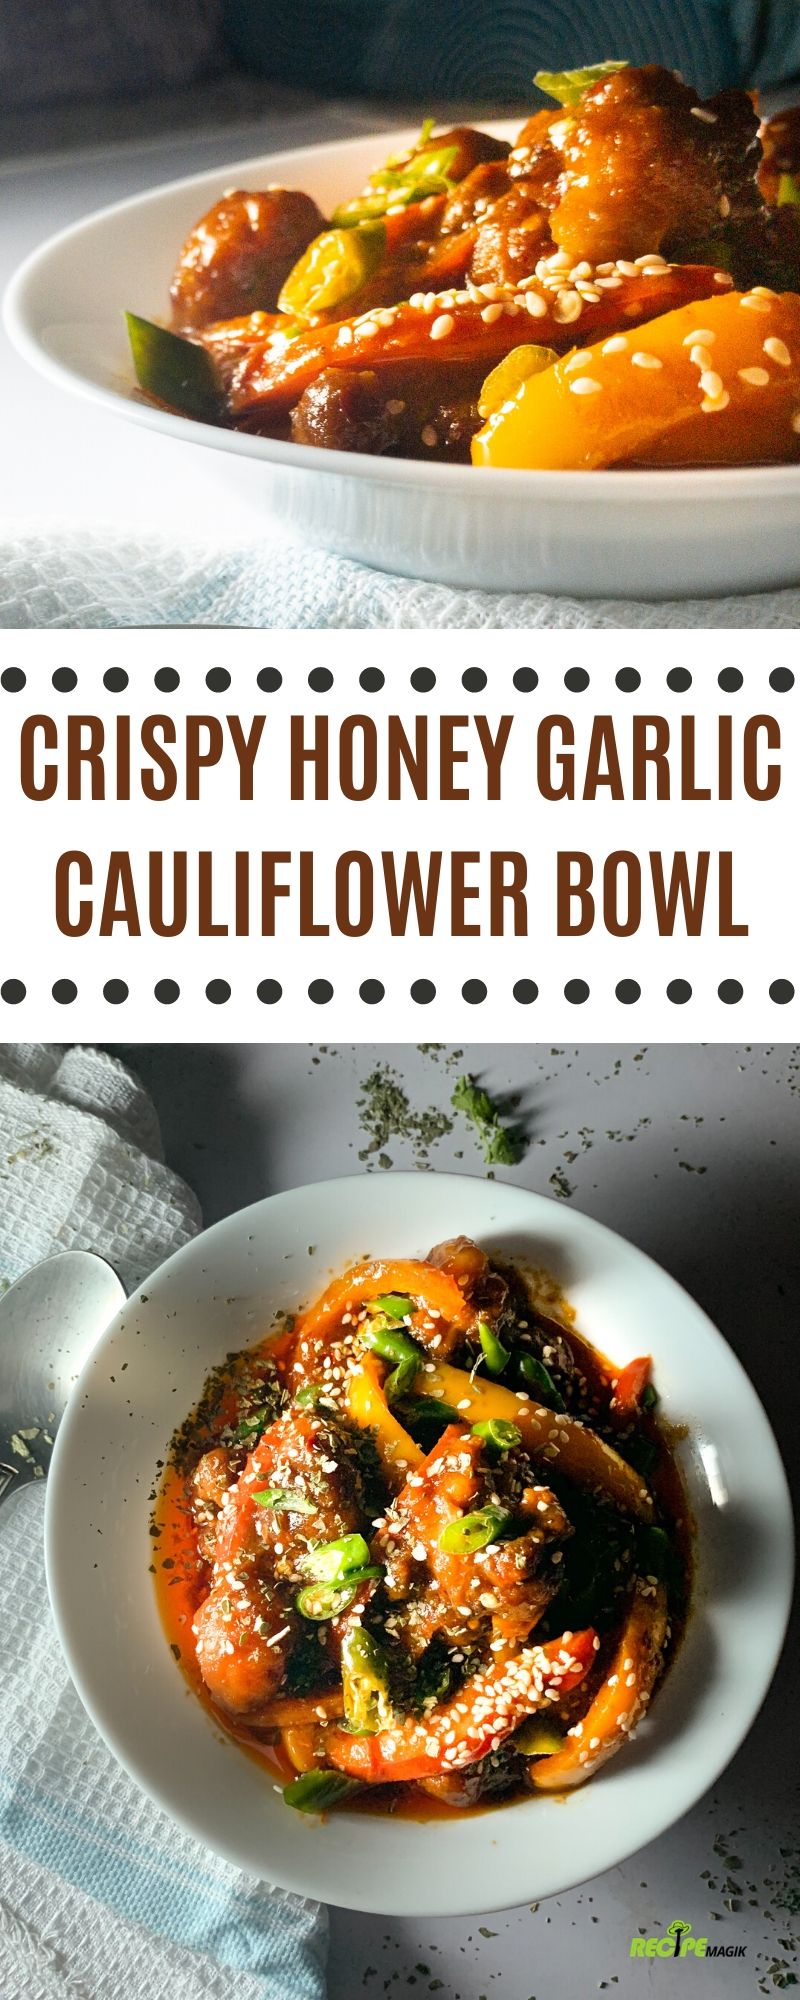 Crispy Honey Garlic Cauliflower Bowls